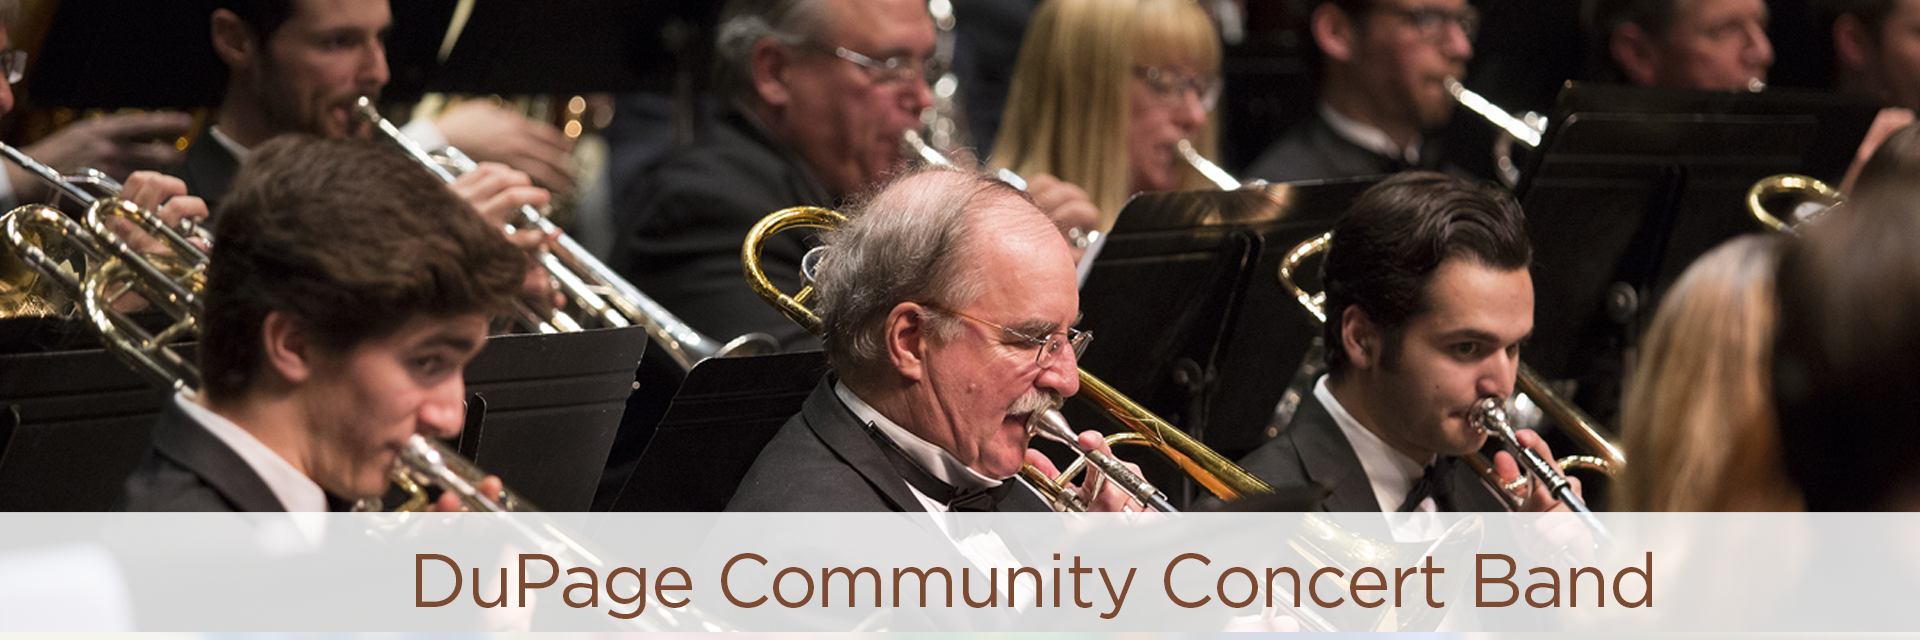 DuPage Community Concert Band